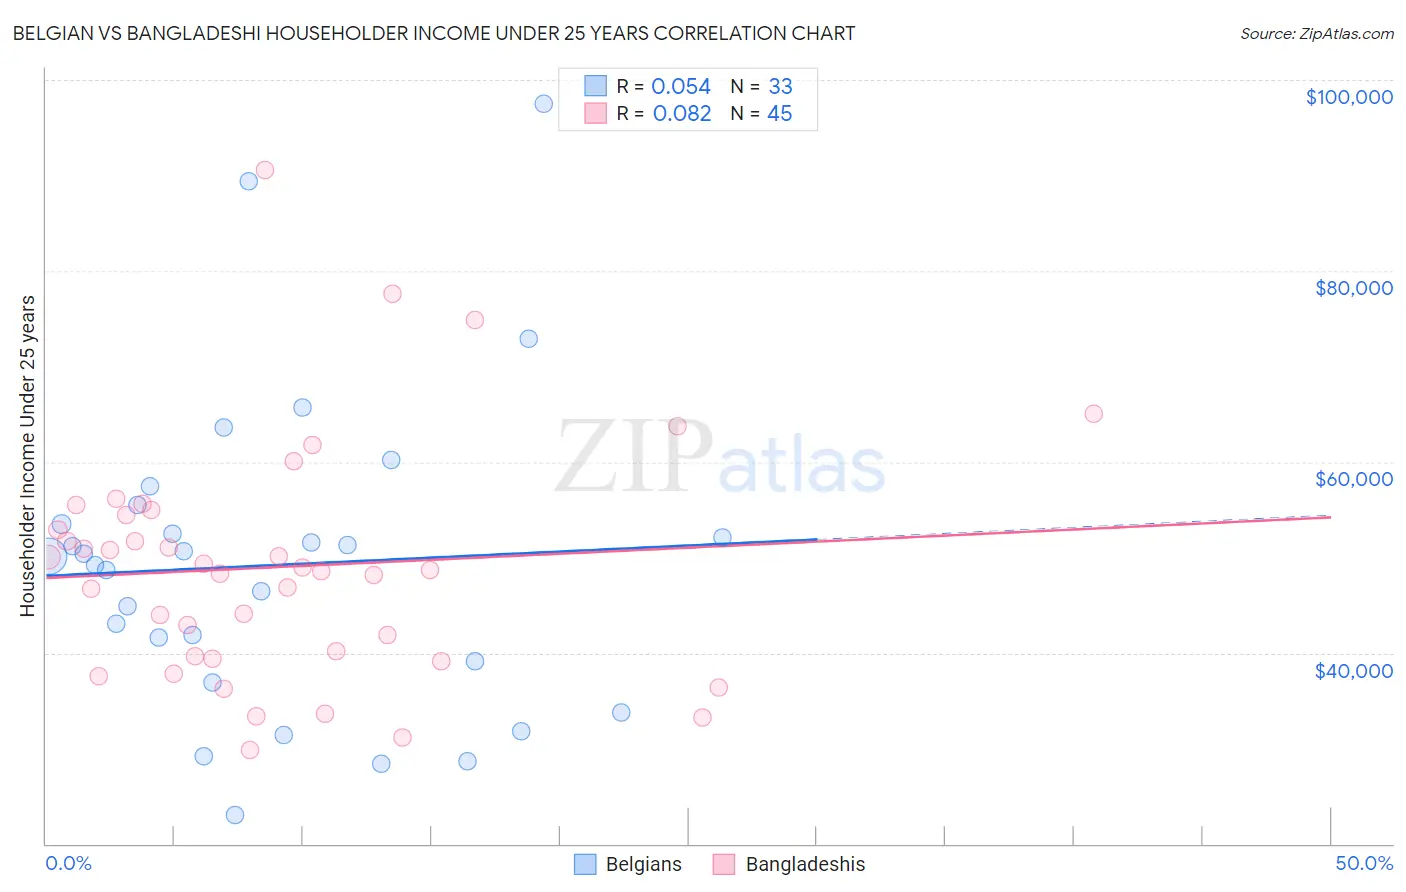 Belgian vs Bangladeshi Householder Income Under 25 years